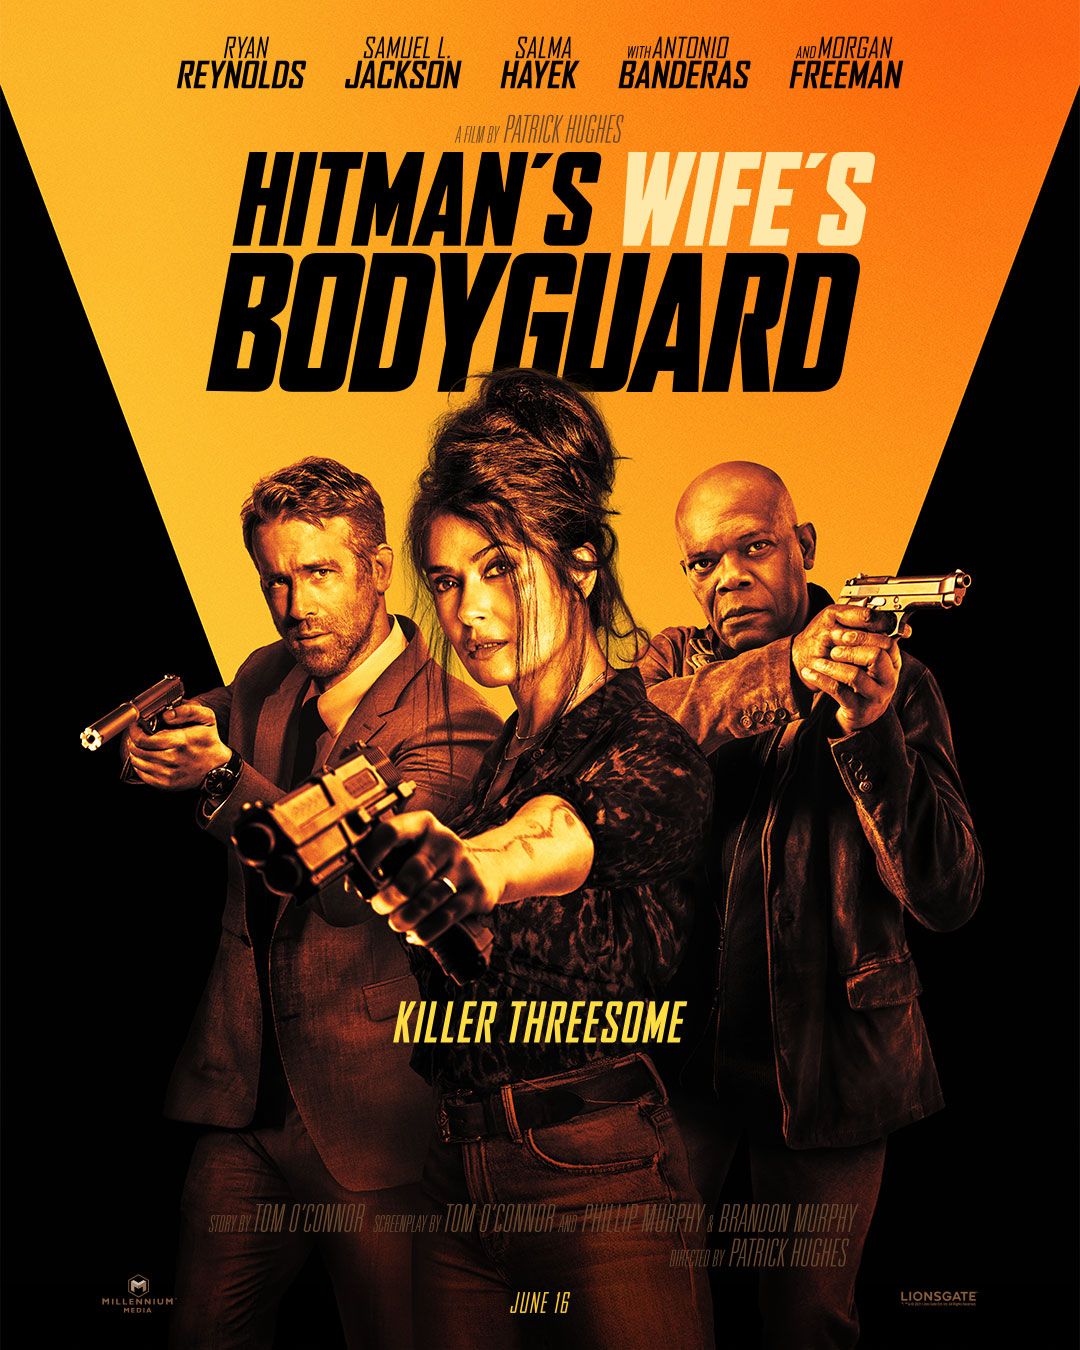 Wife's Hitman's Bodybuard poster